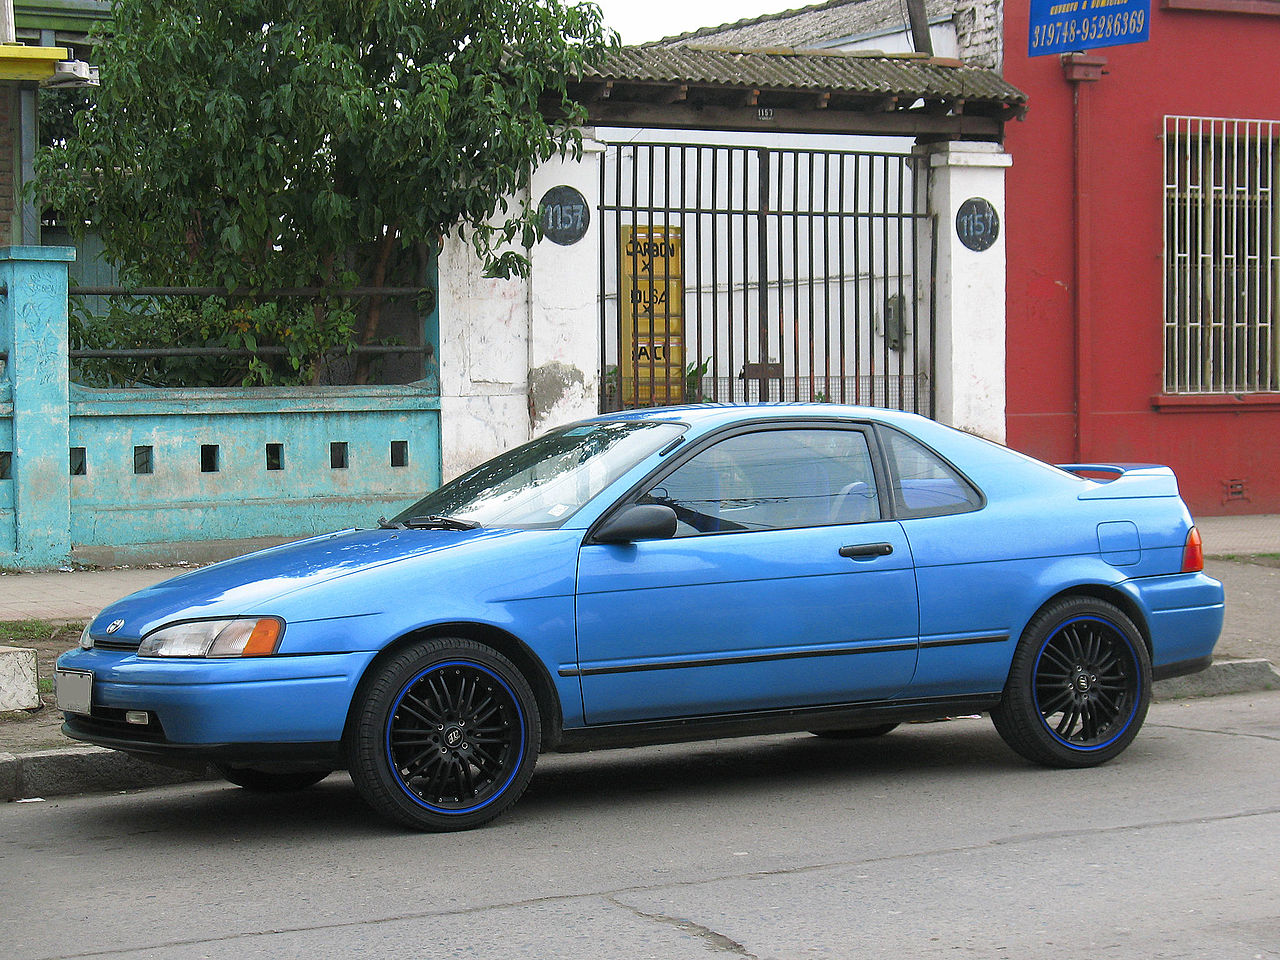 Image of Toyota Paseo 1.5 1994 (15953024041)